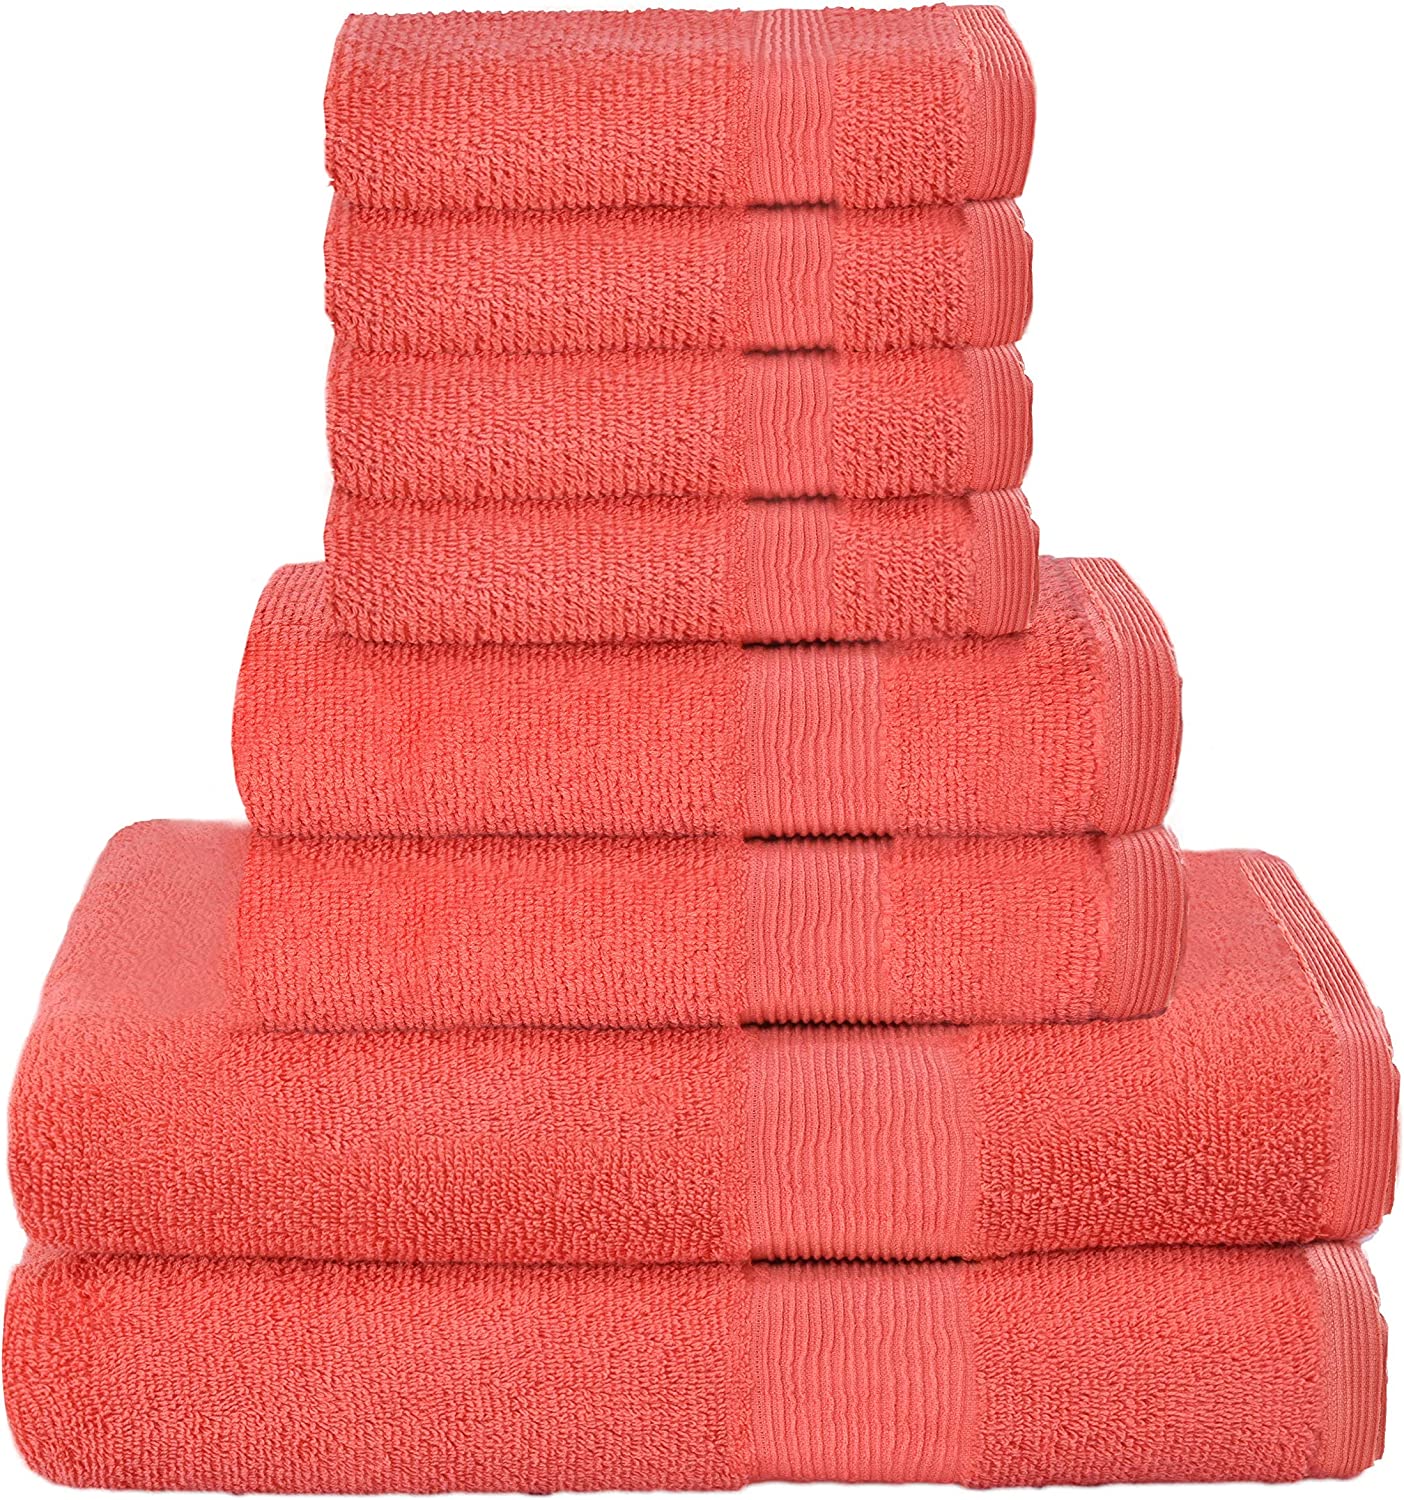 Elvana Home 4 Pack Bath Towel Set 27x54, 100% Ring Spun Cotton